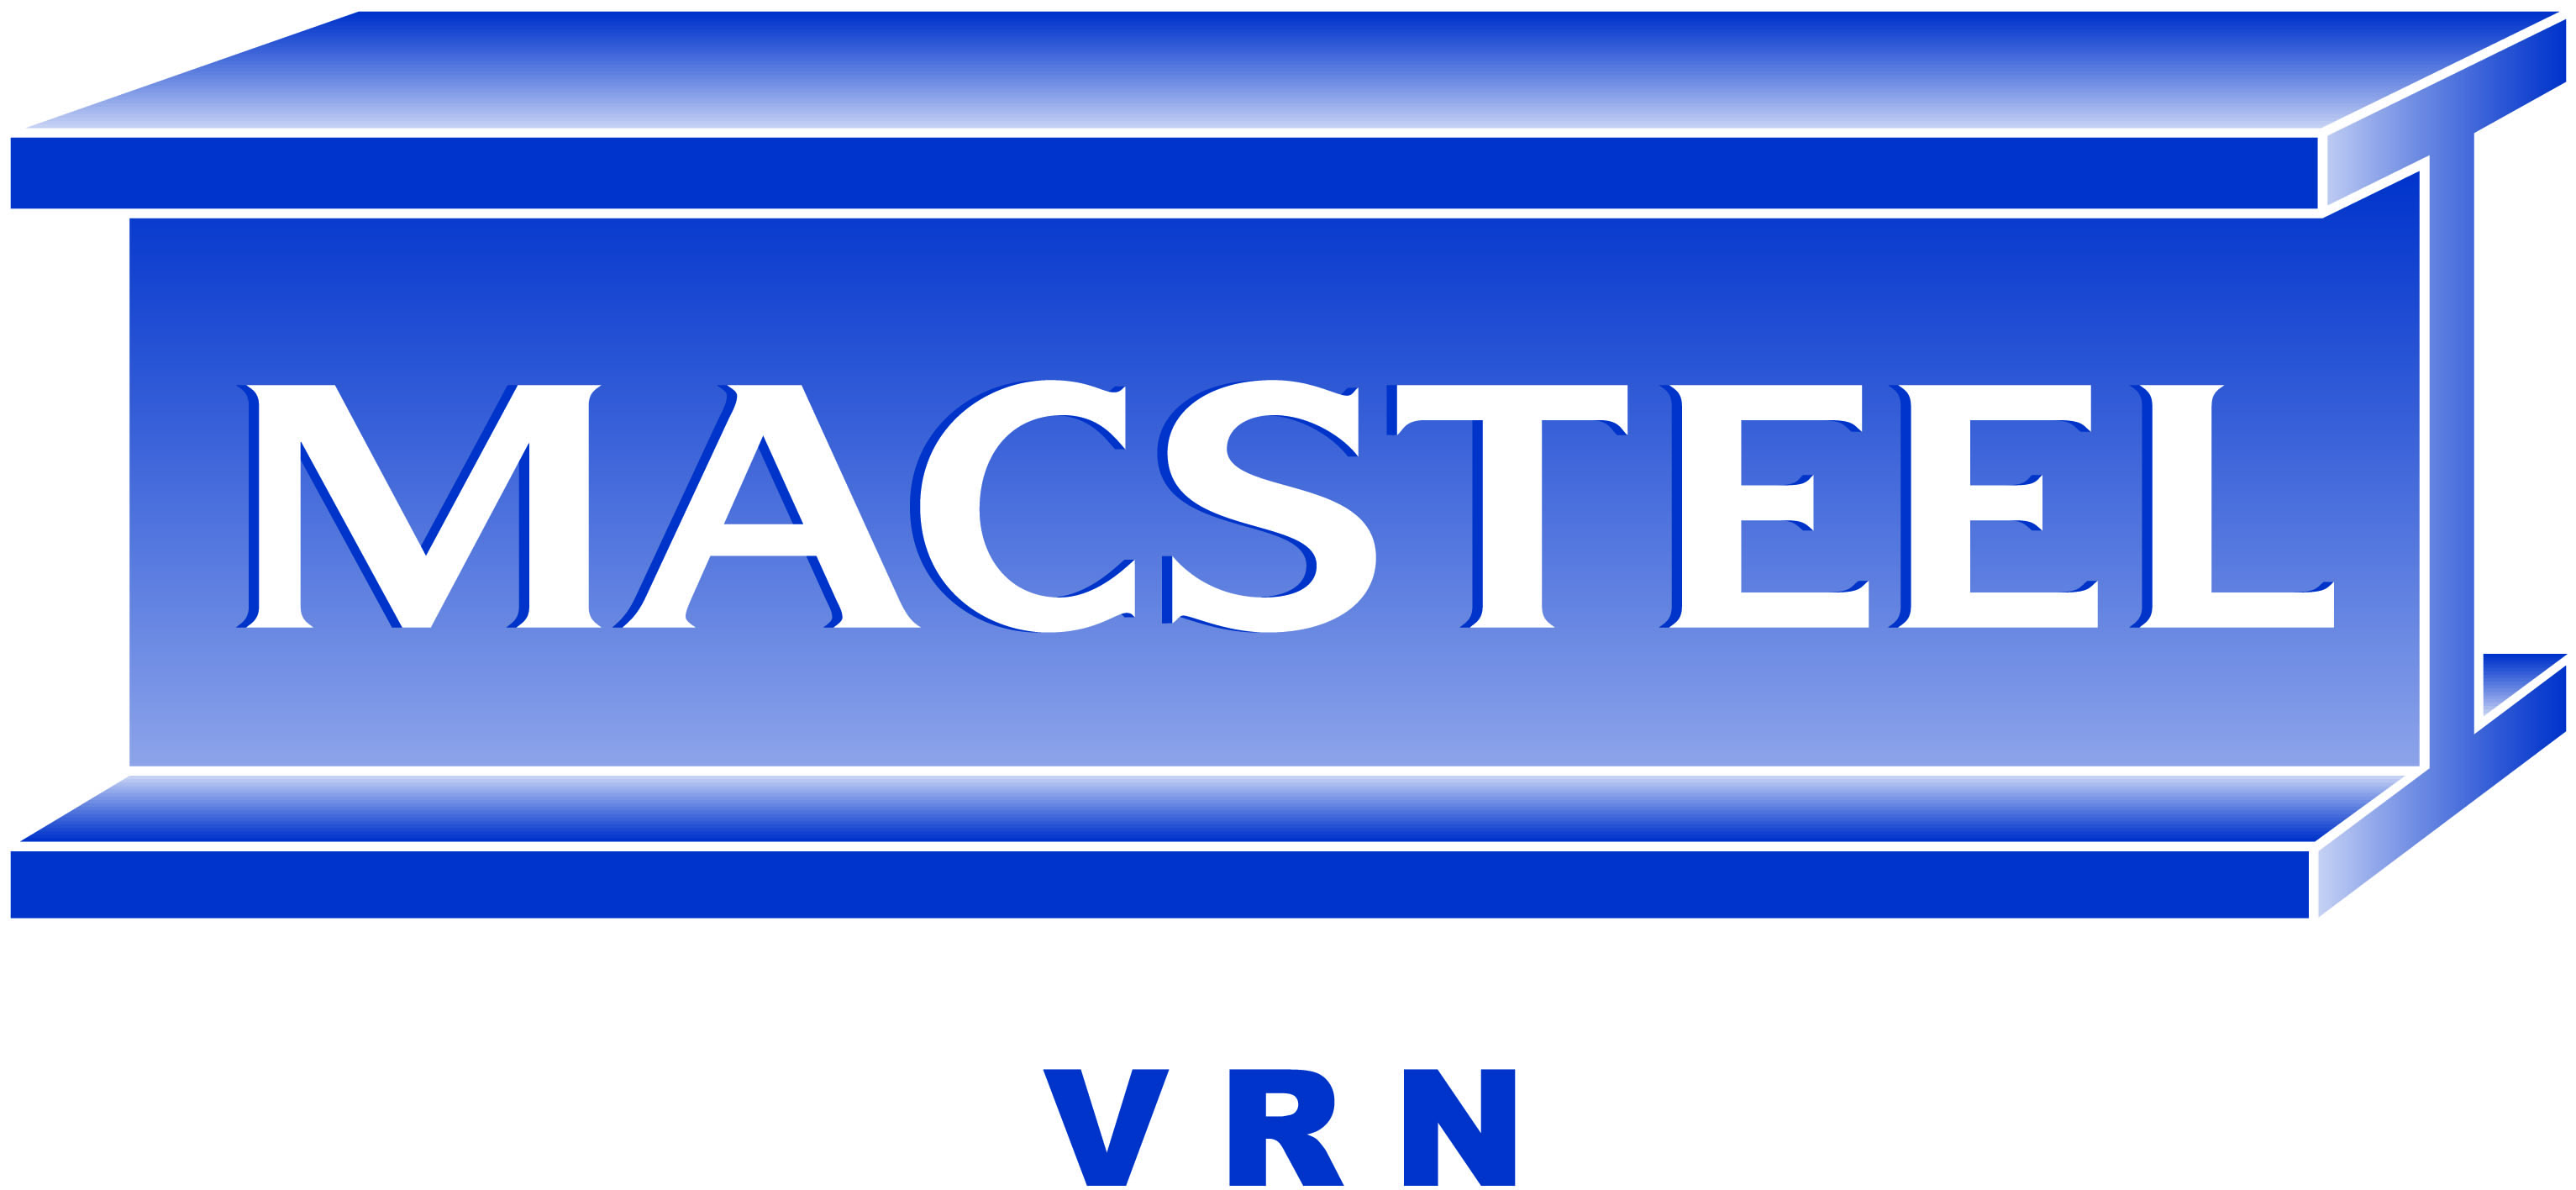 Macsteel Vrn- Kathu logo